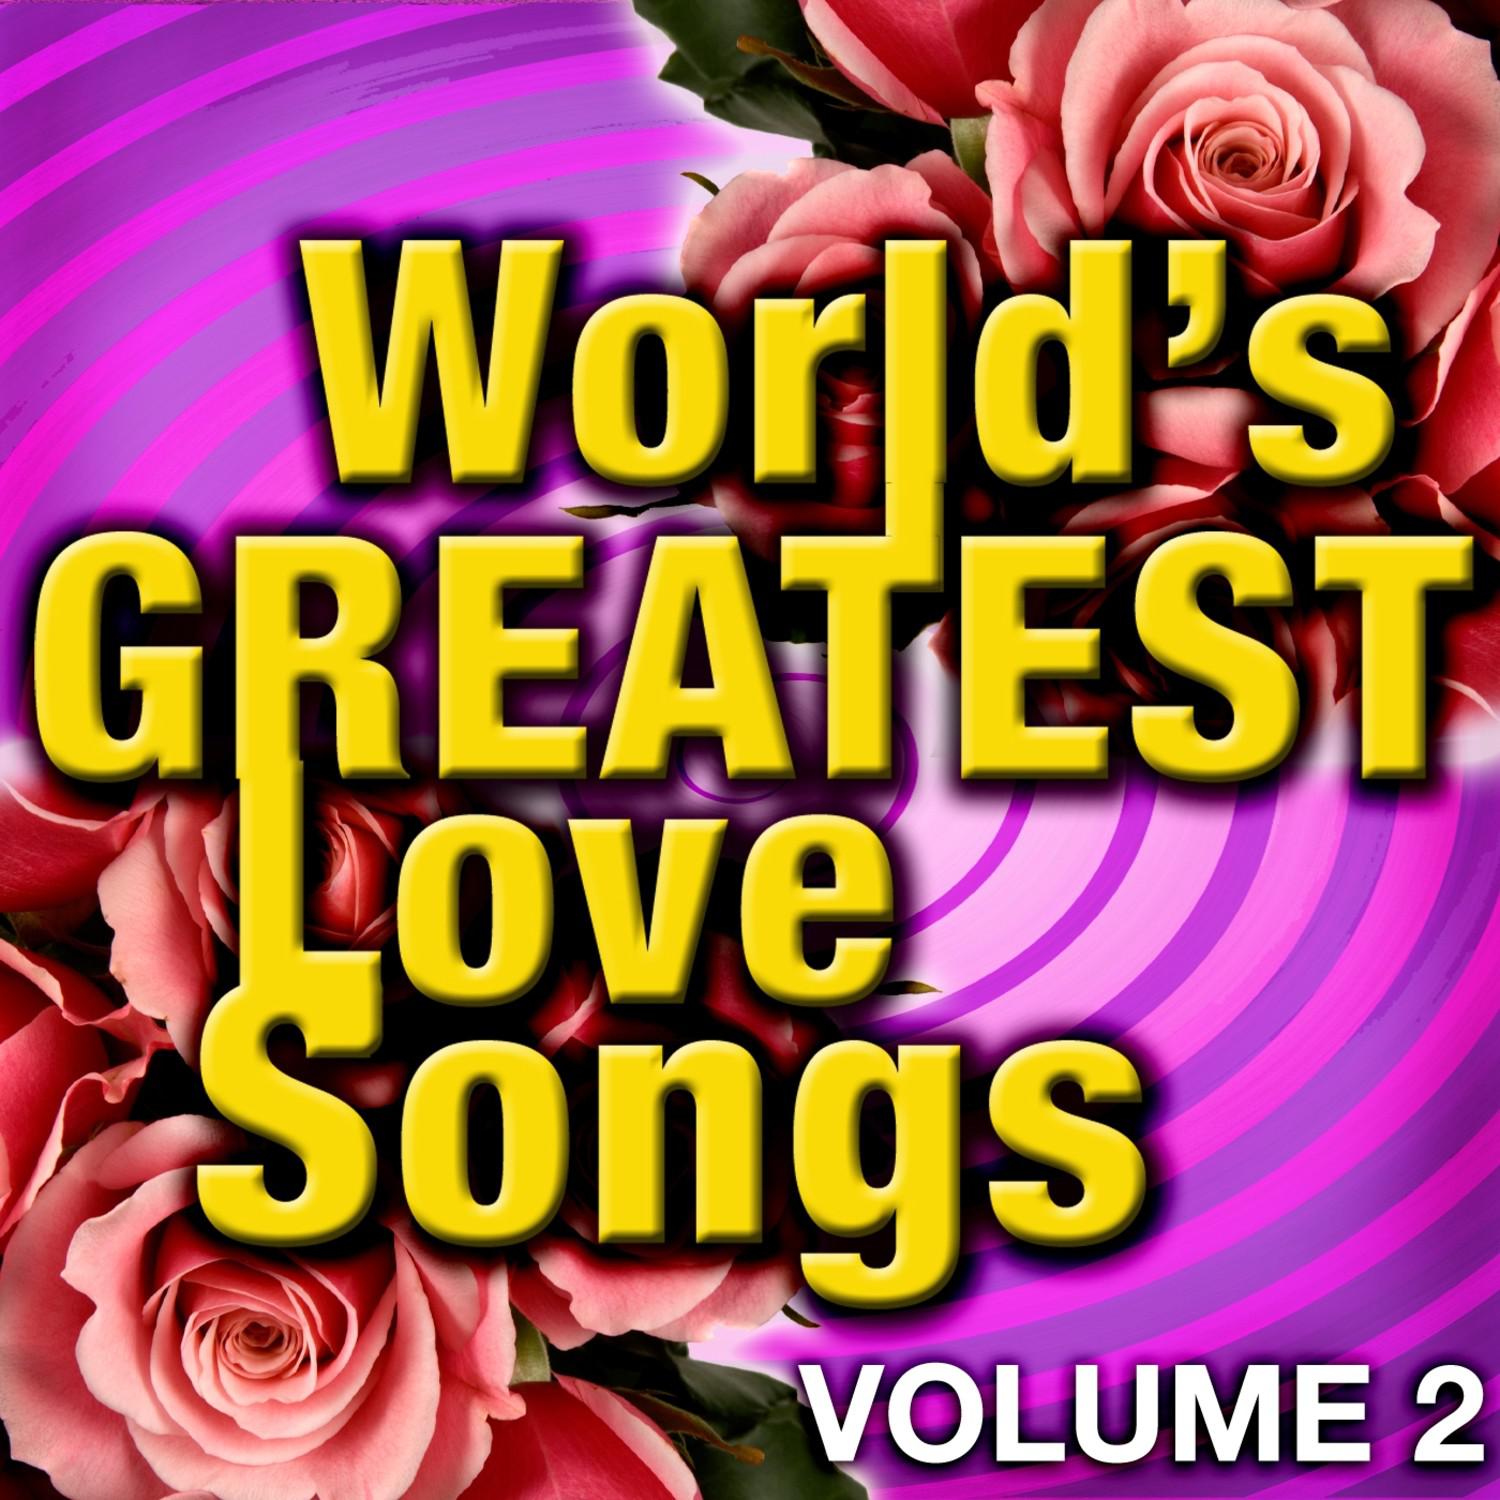 World's Greatest Love Songs - Vol. 2